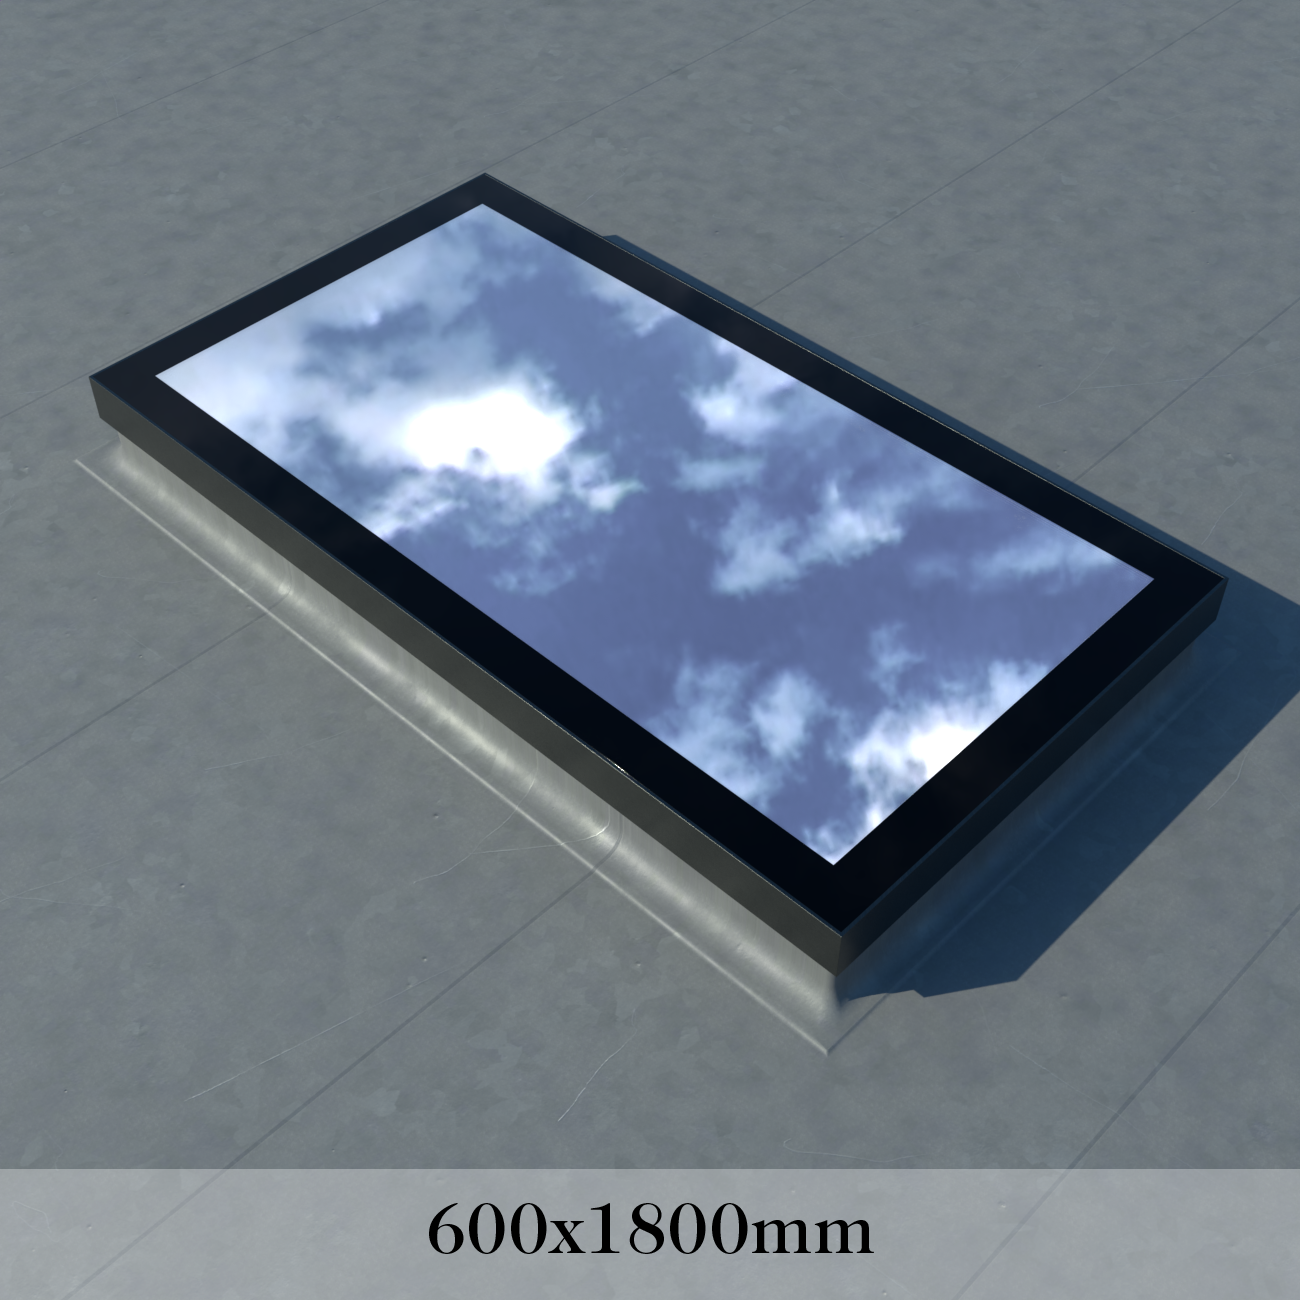 Framed Skylight 600 x 1800 mm – Triple glazed